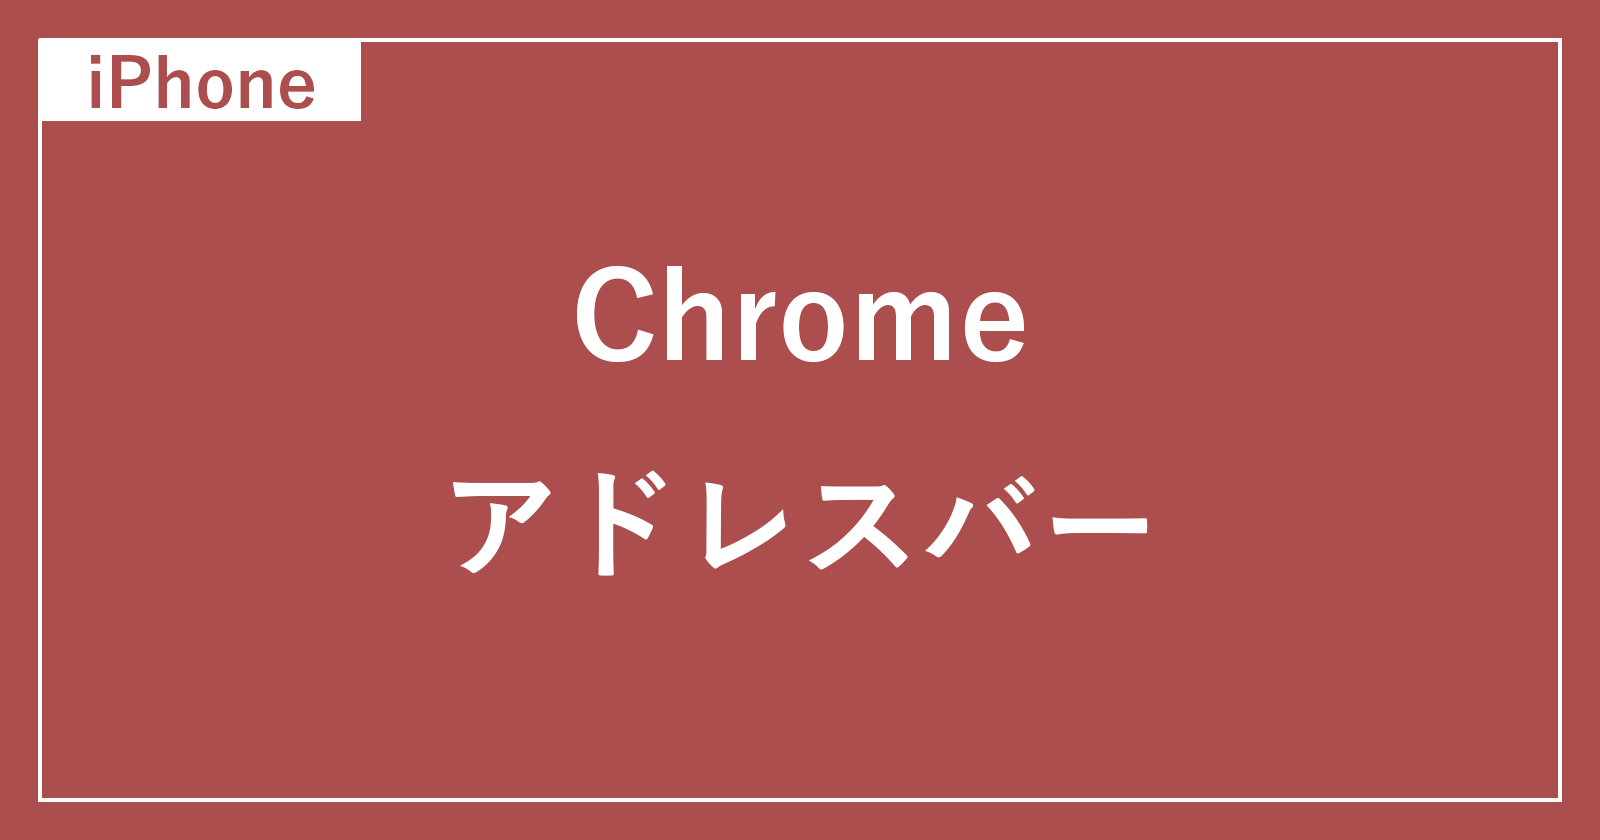 iphone chrome address bar